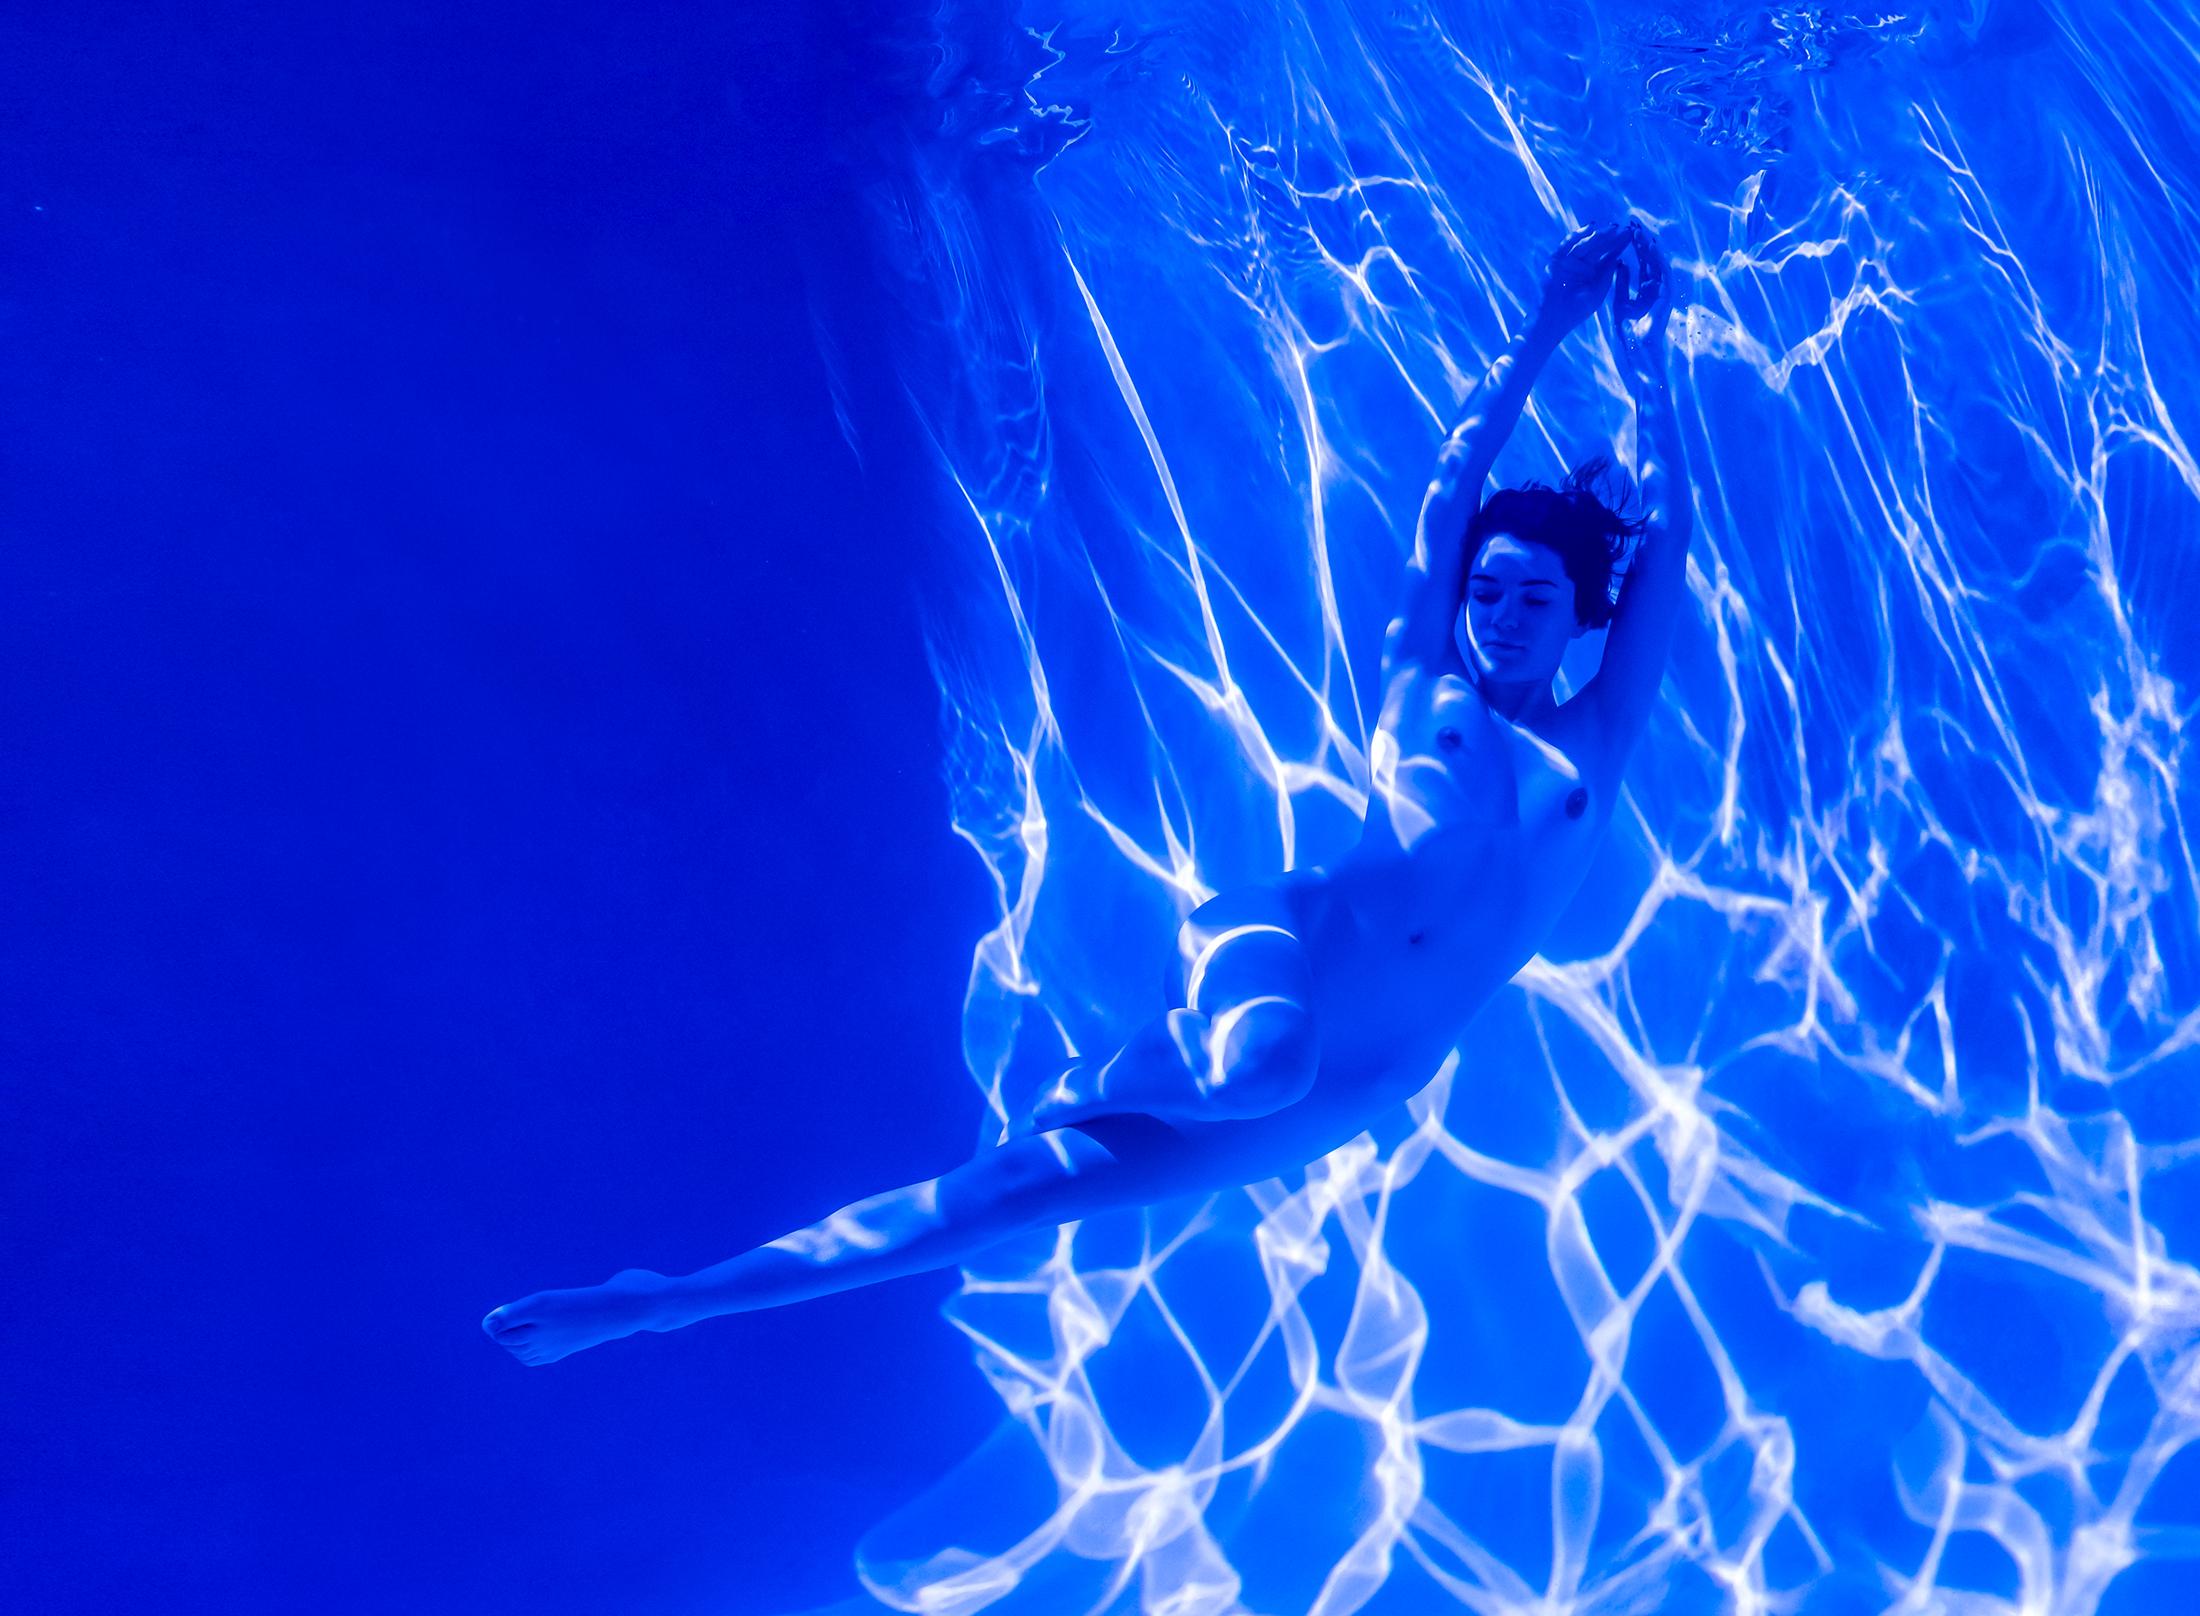 Alex Sher Figurative Photograph - Fluorescence - underwater nude photograph - archival pigment print 26" x 35"